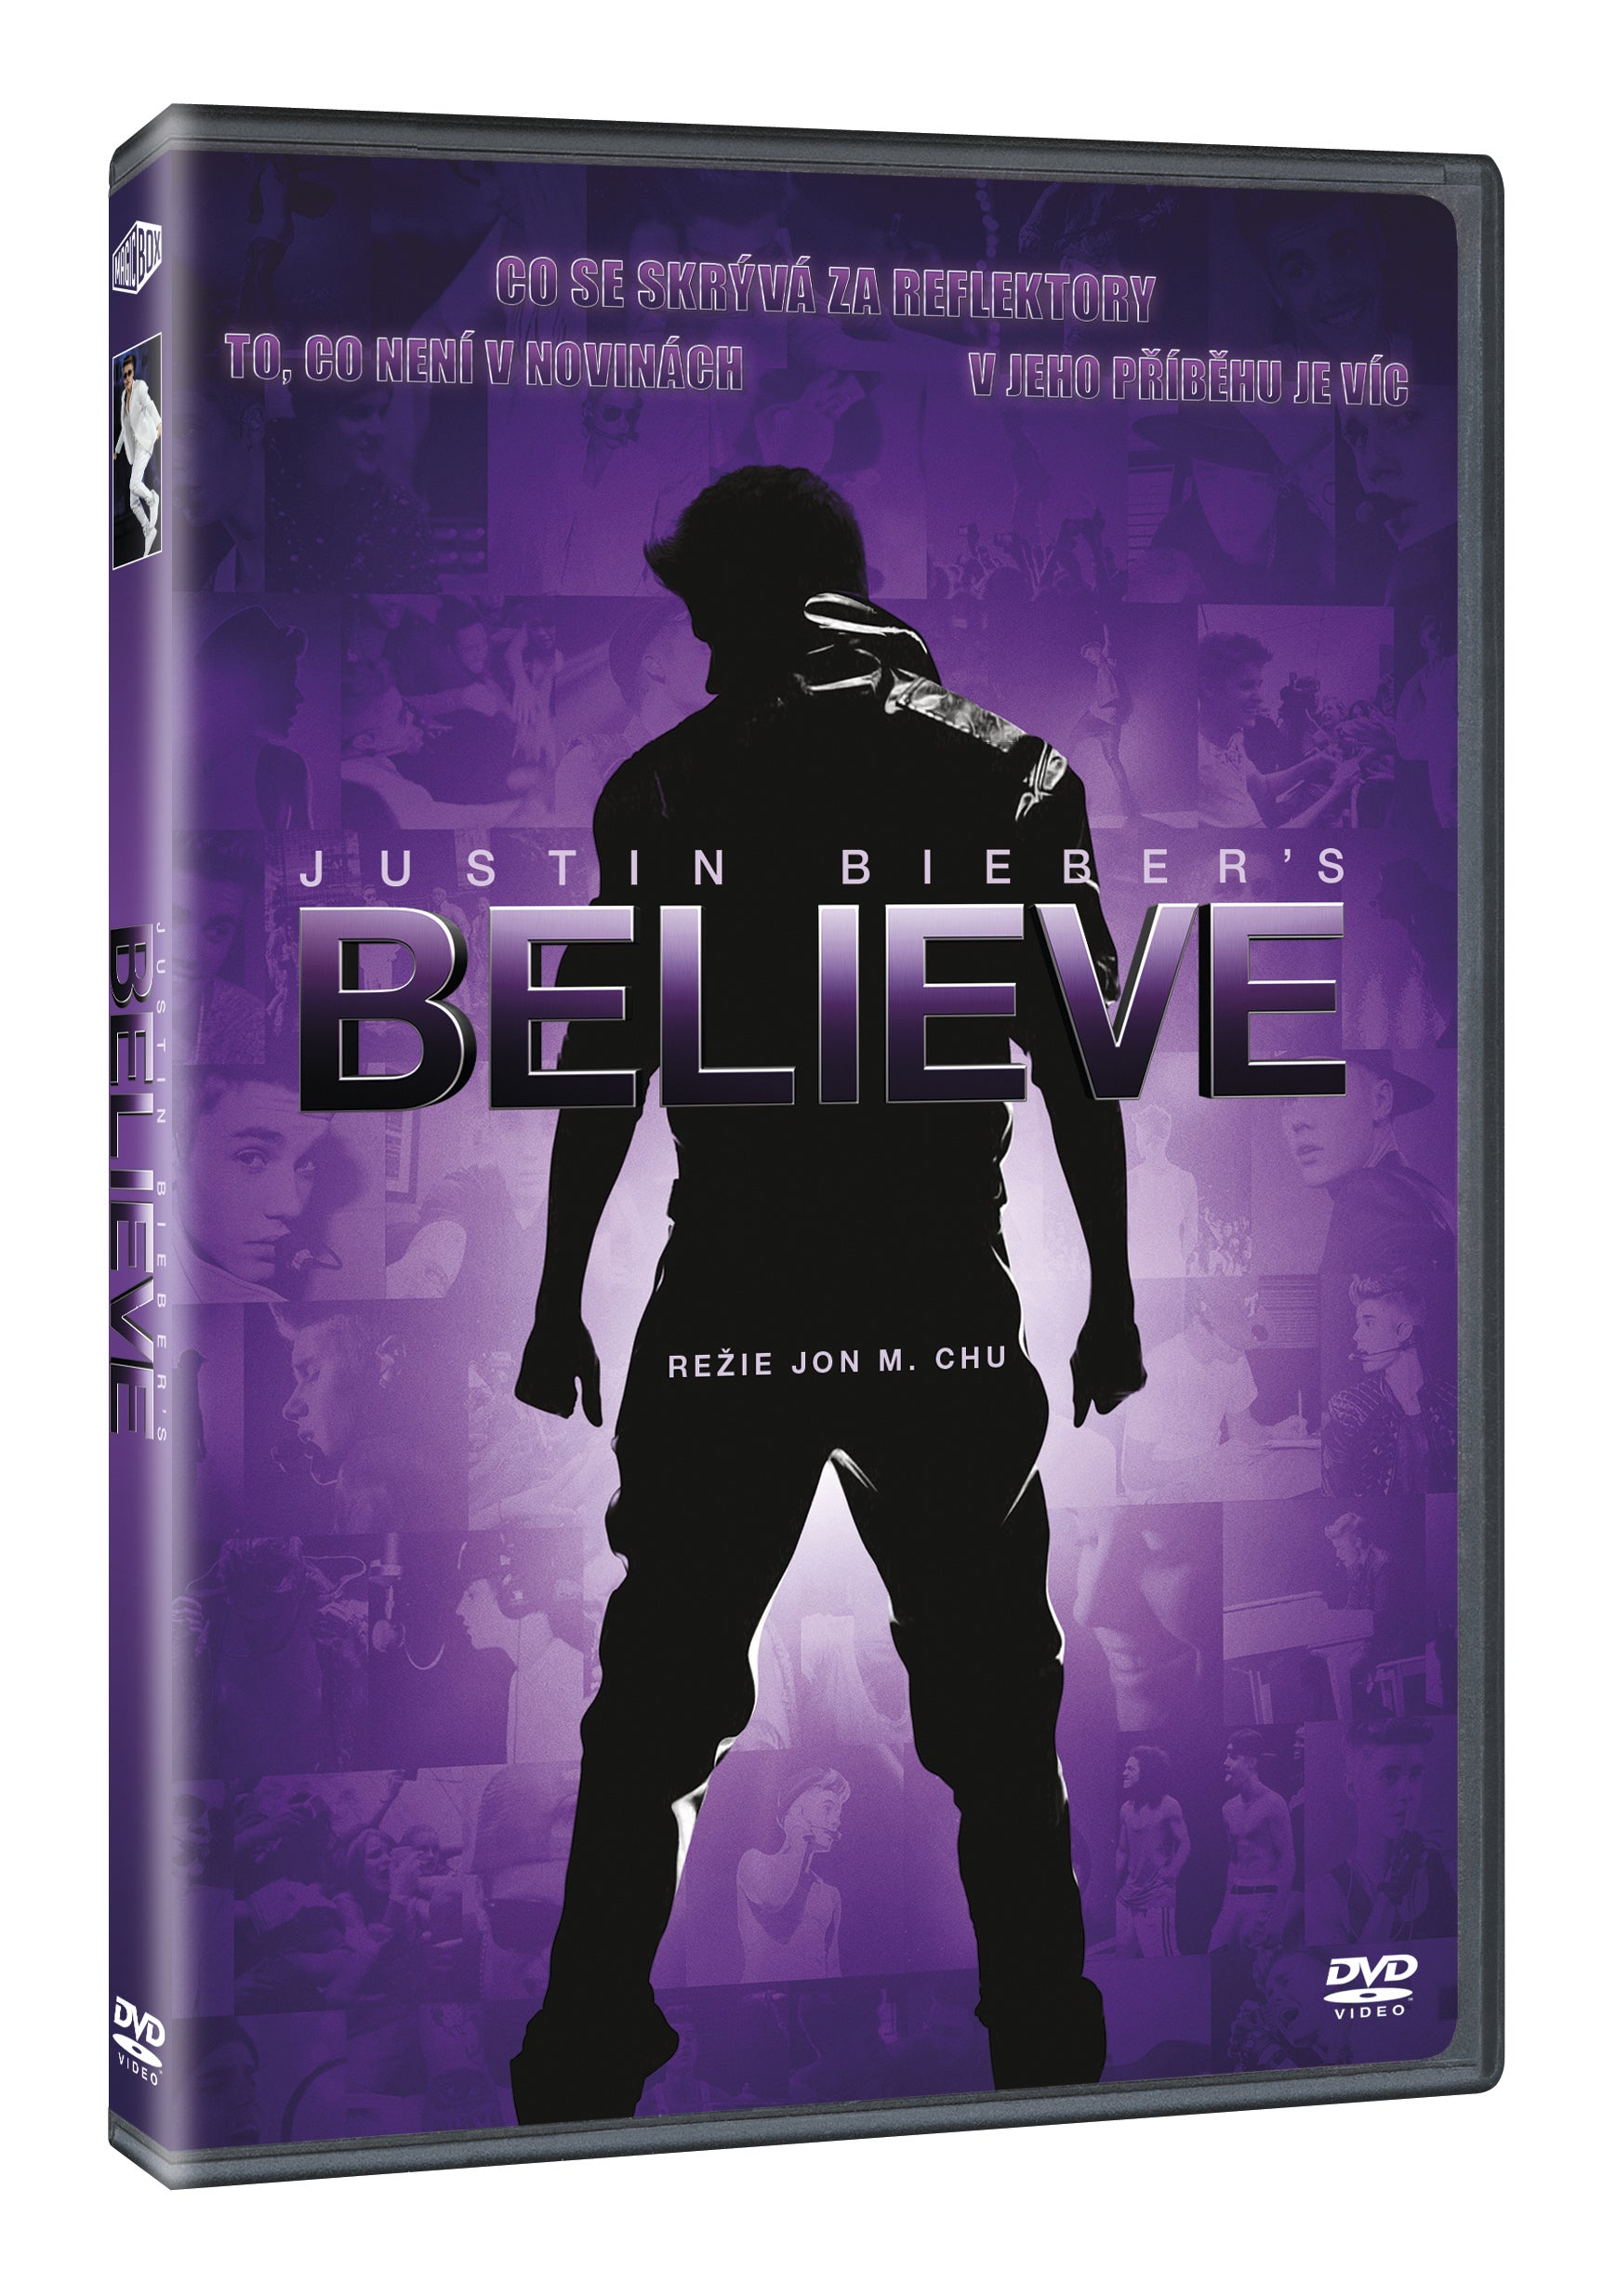 Justin Bieber's Believe DVD / Justin Bieber's Believe